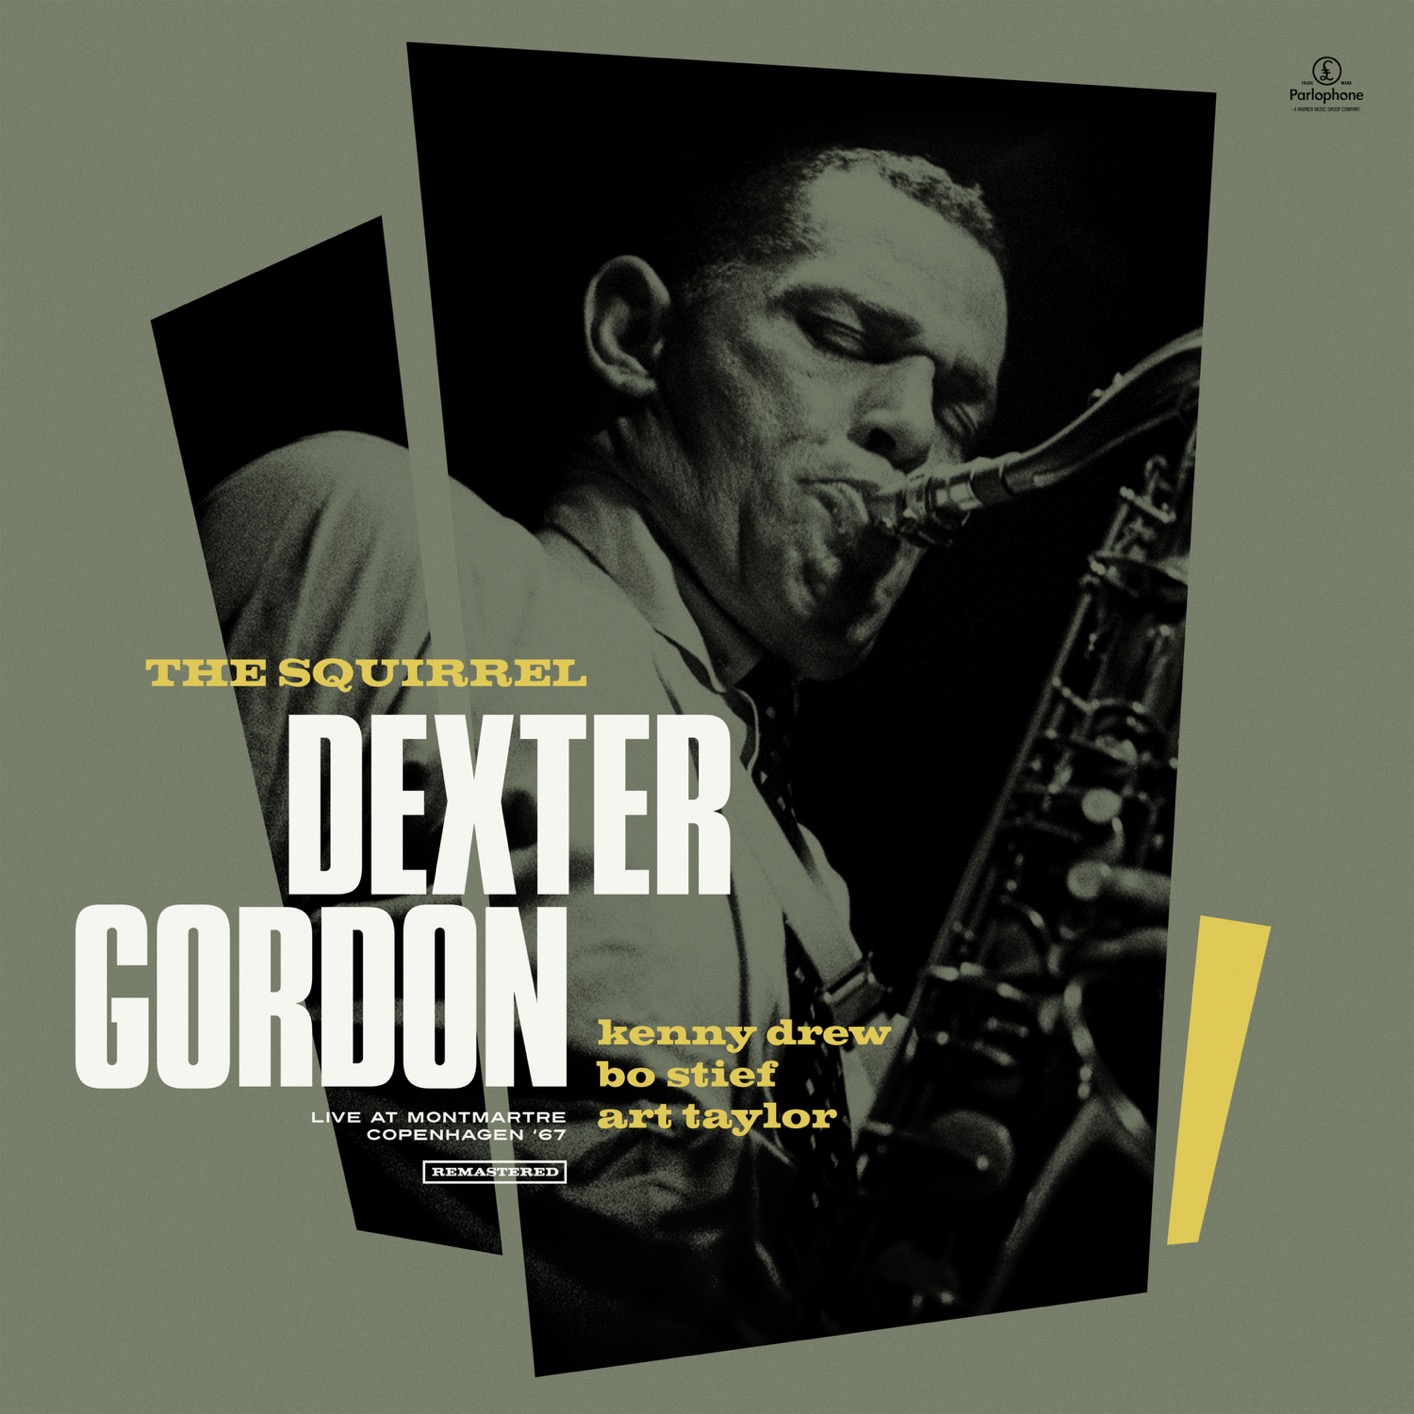 Dexter Gordon - The Squirrel [Live at Montmartre, Copenhagen 1967] (Remastered) (2001/2020) [FLAC 24bit/44,1kHz]